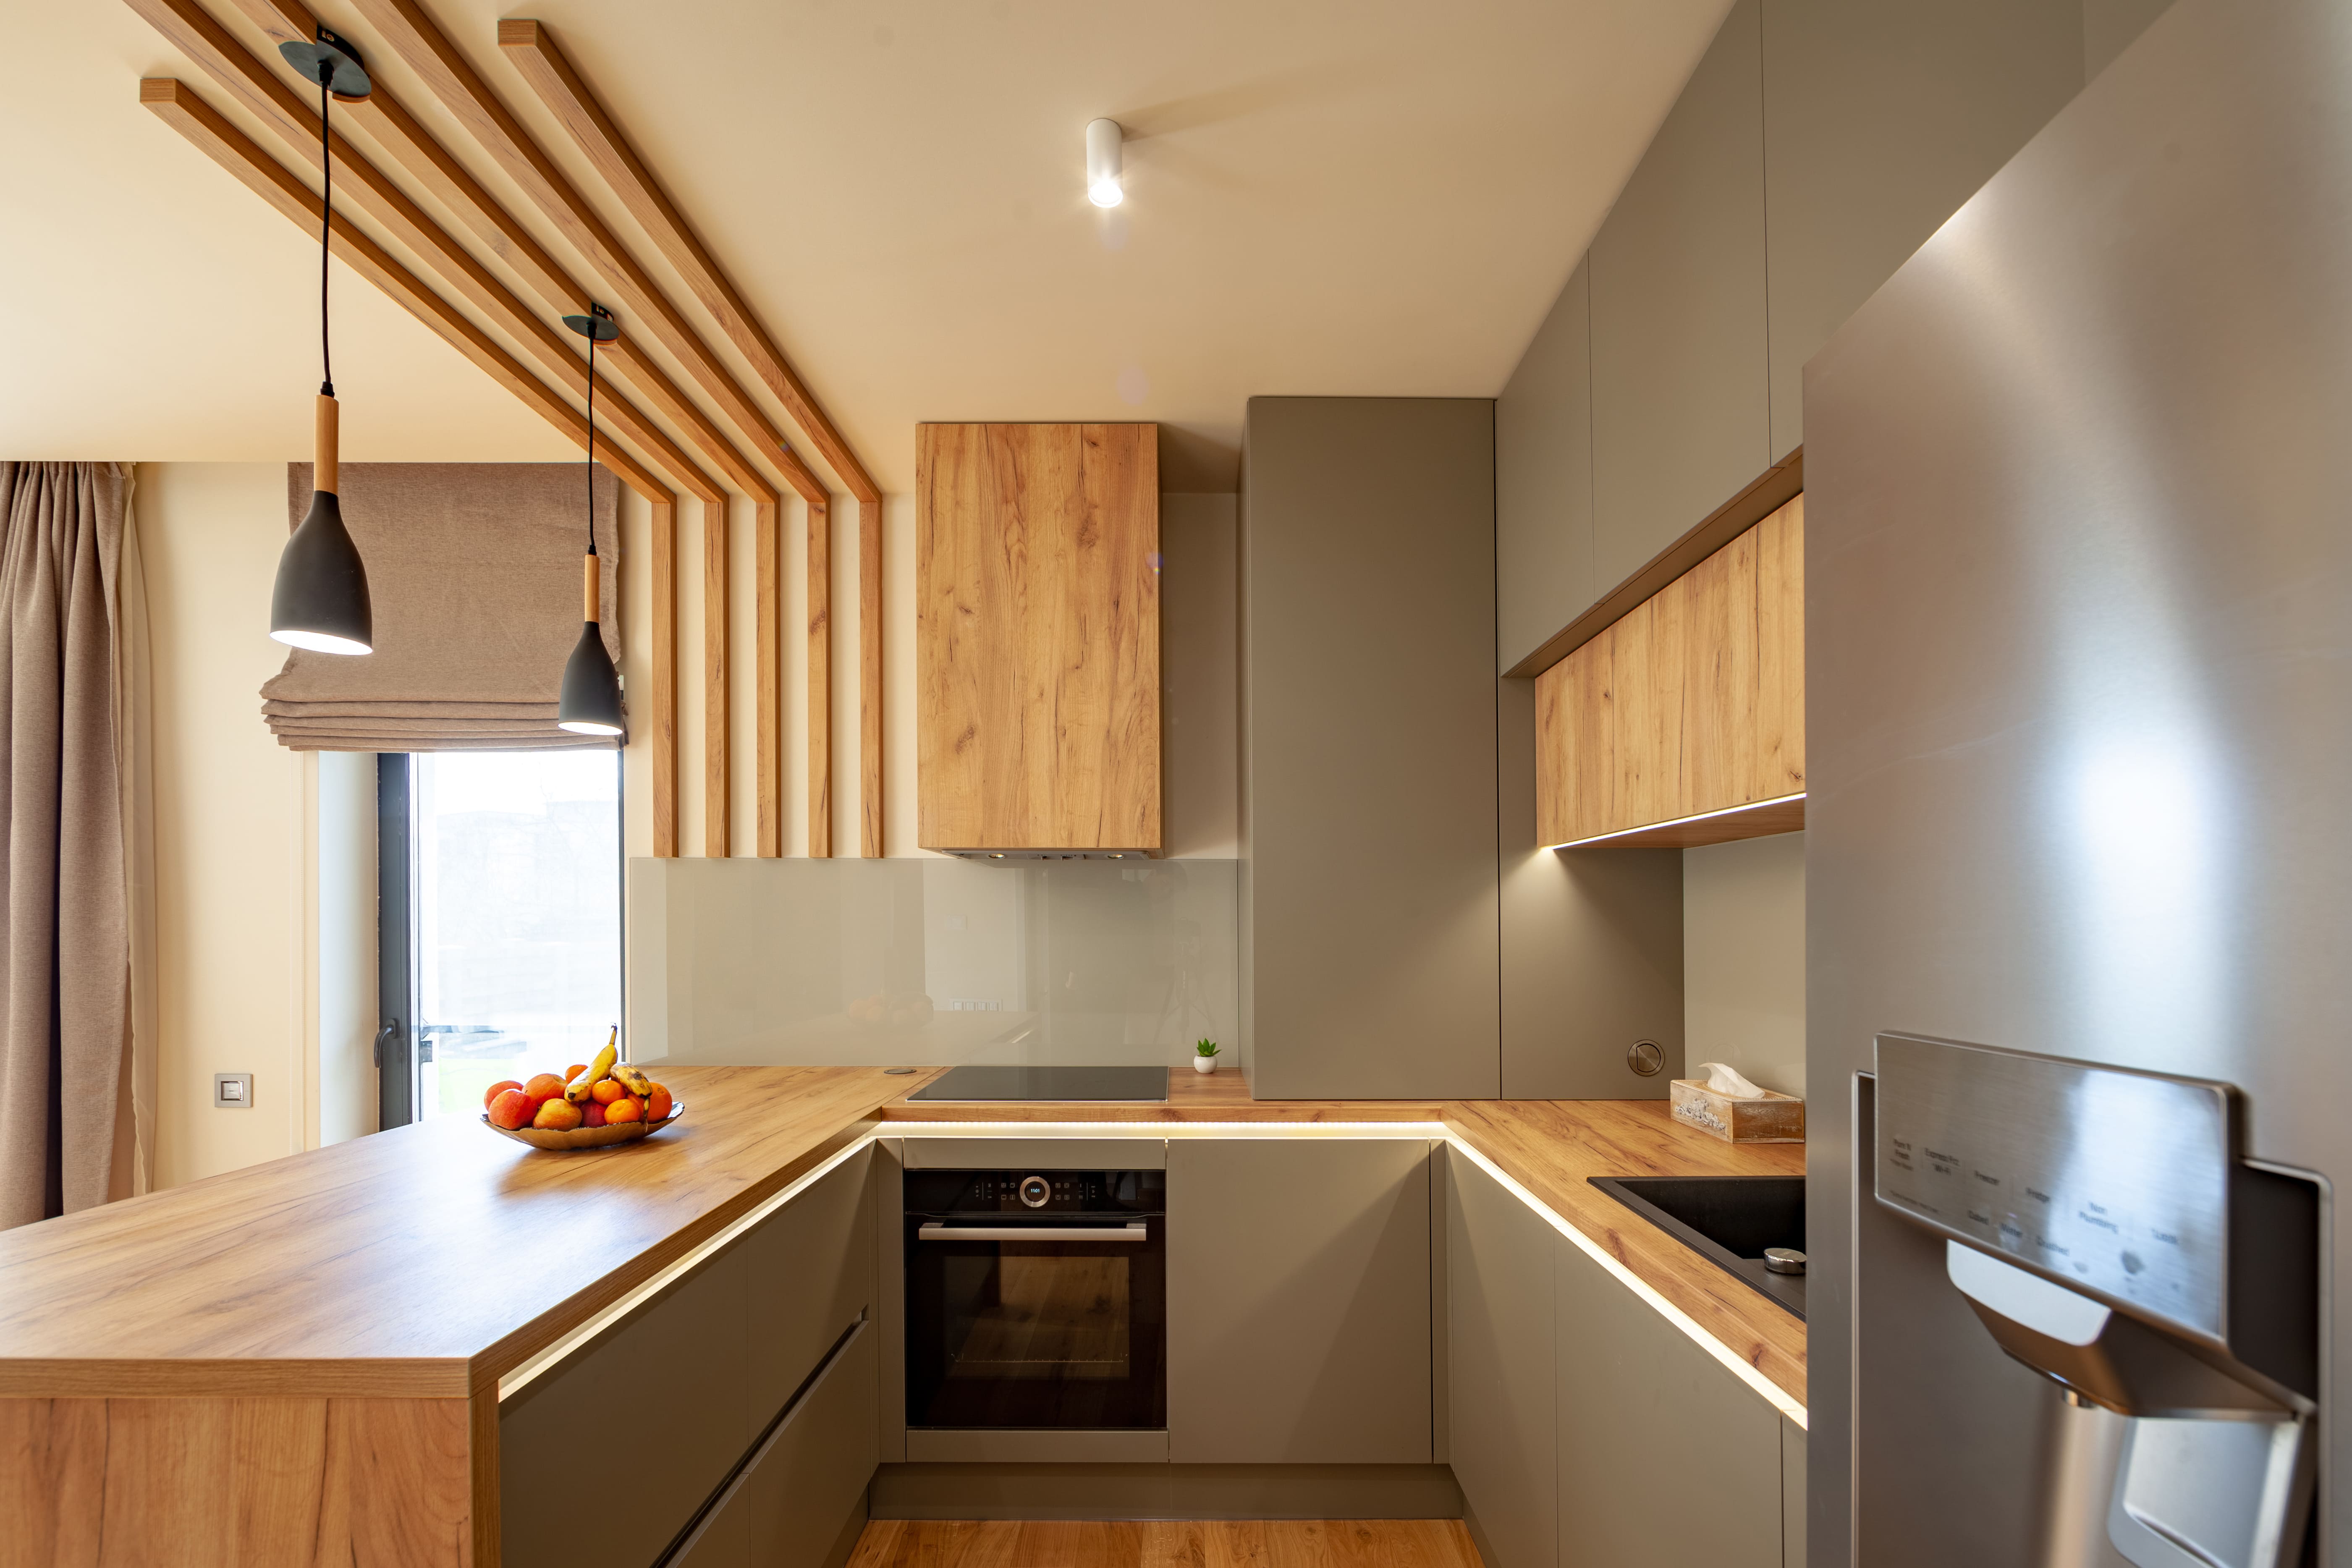 https://www.decorpot.com/images/108539513elevate-your-indian-ktchen-with-stunning-U-shaped-kitchen-designs.jpg